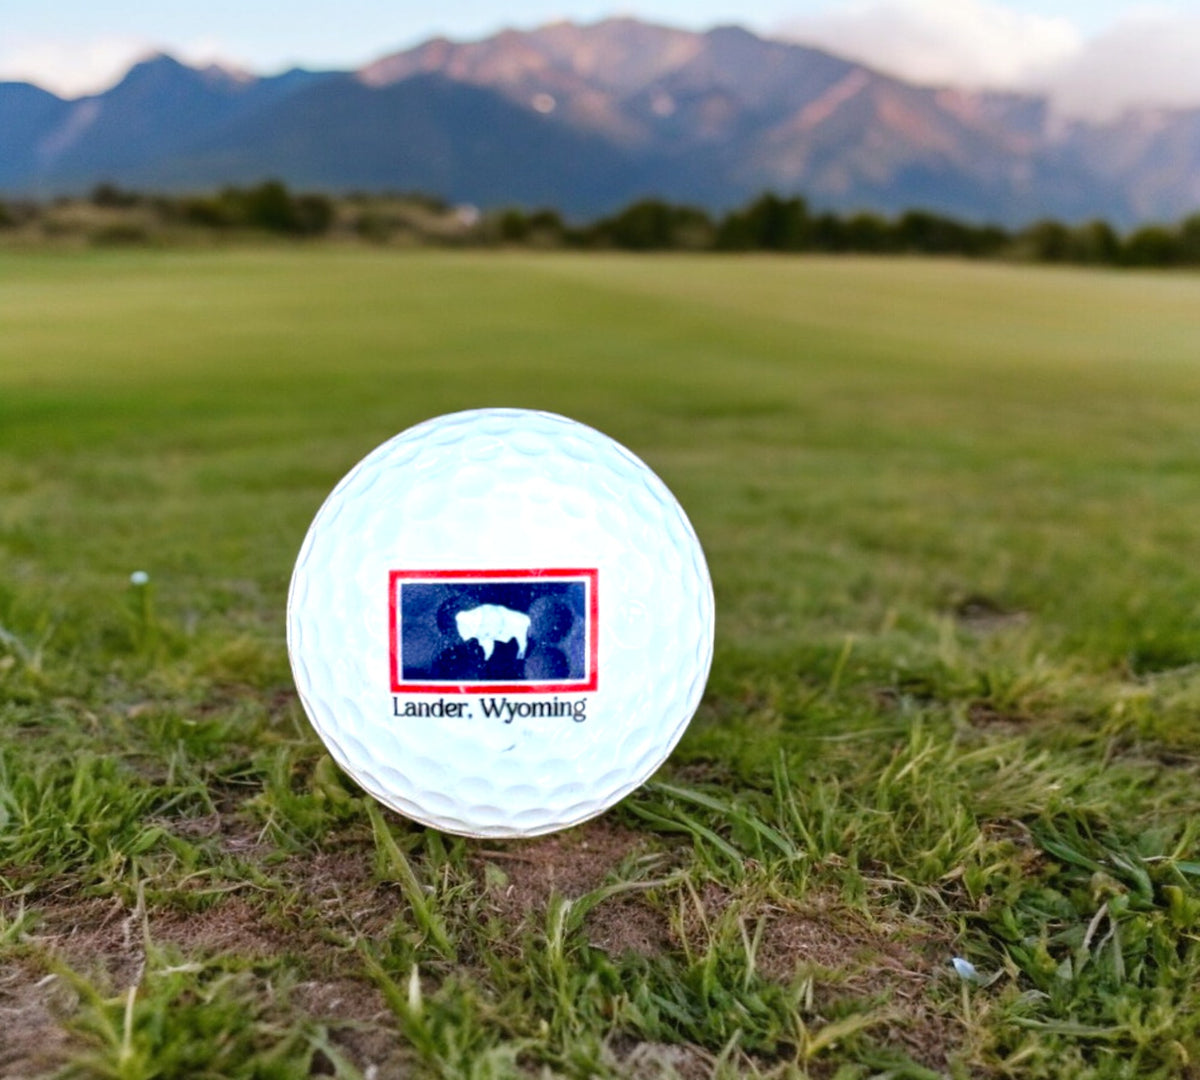 Lander, Wyoming Golf Ball Sleeve of 3